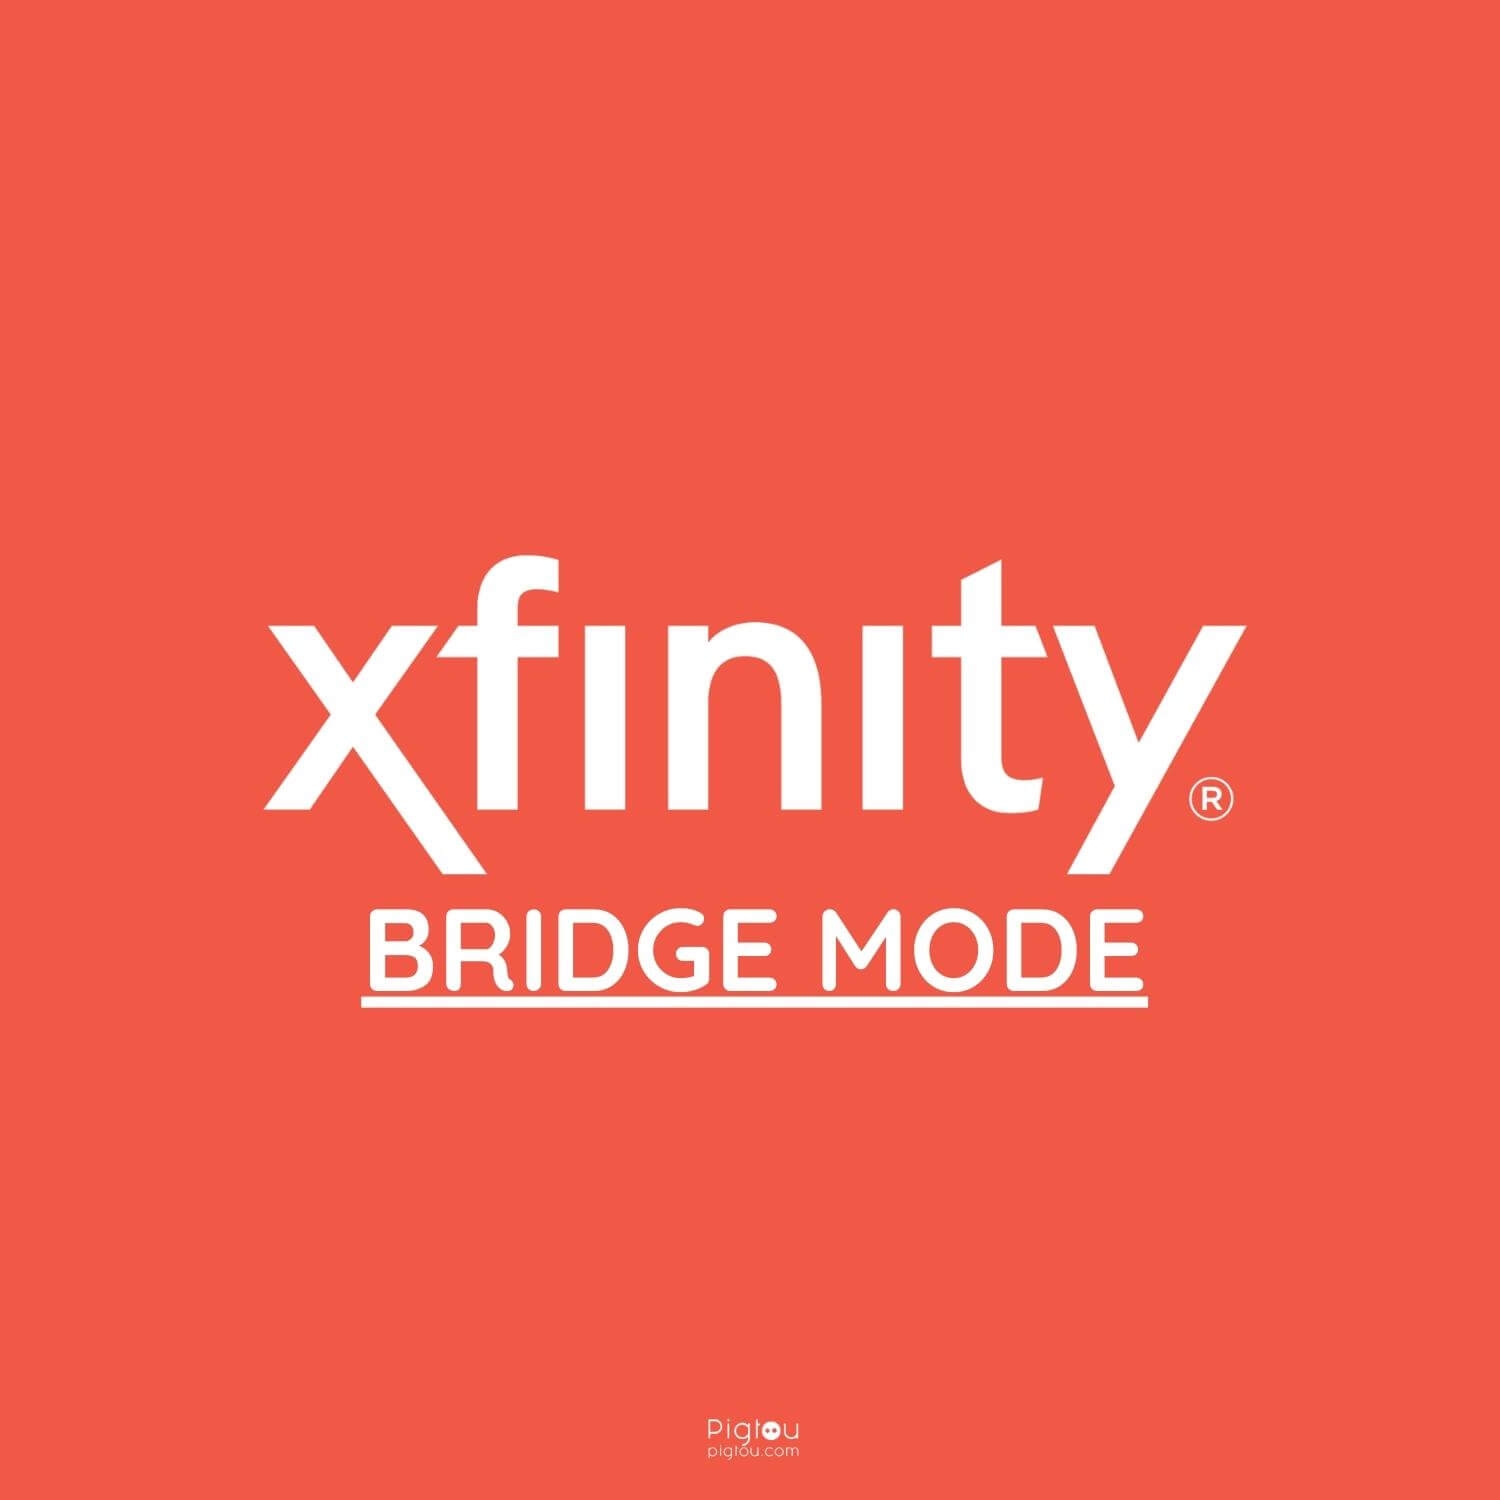 How To Use Xfinity Bridge Mode